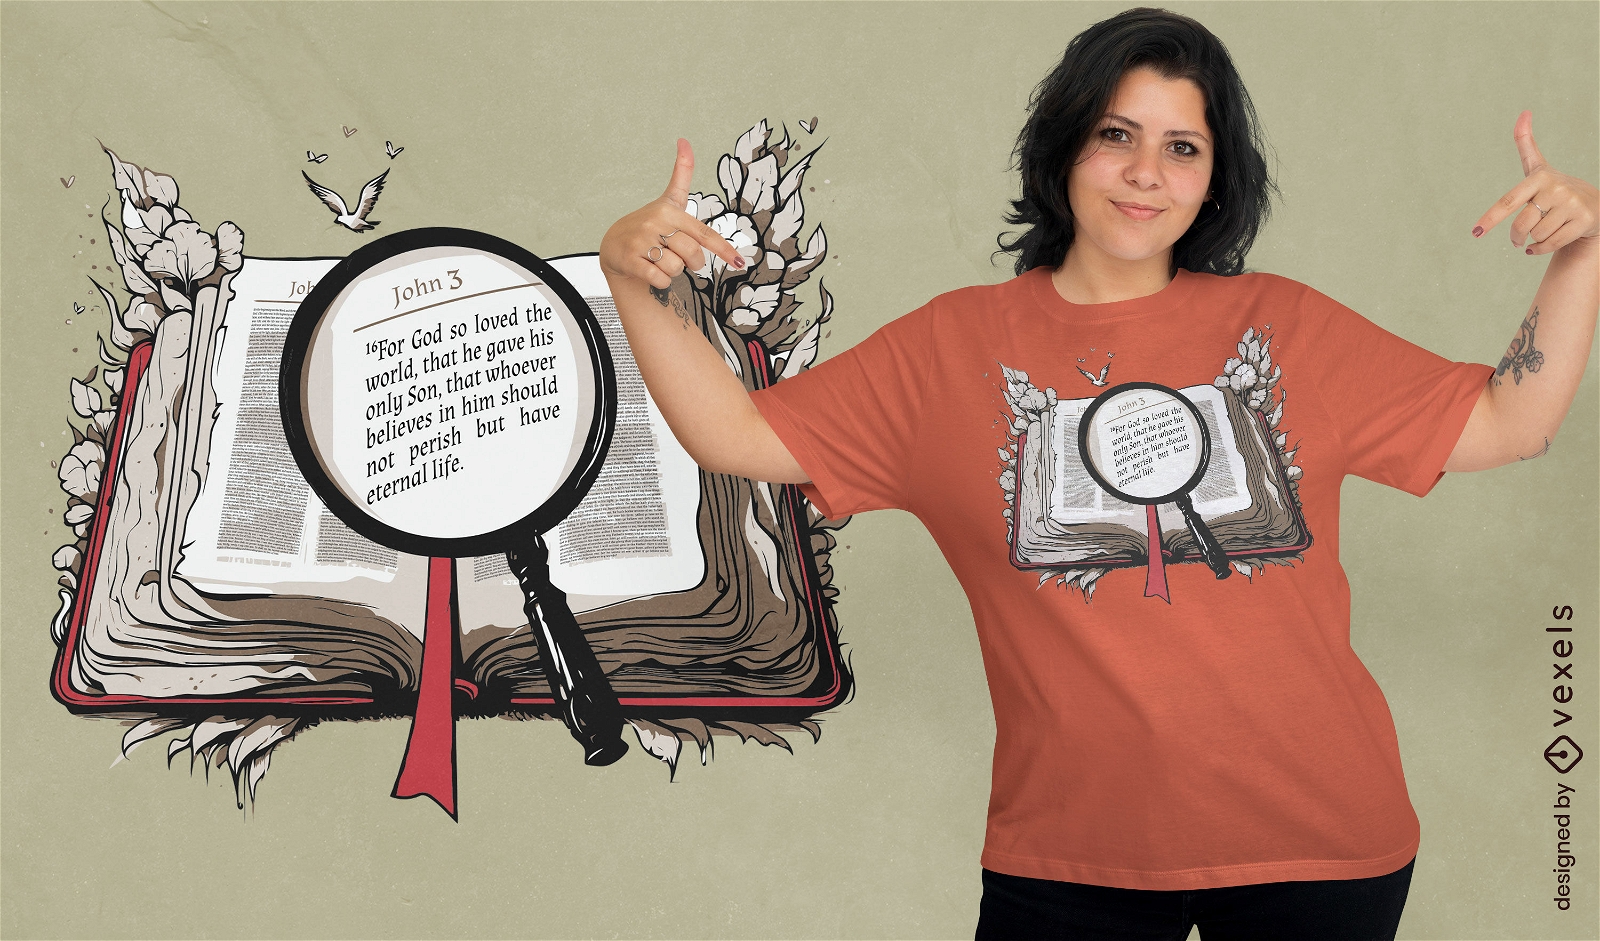 Biblical quote t-shirt design